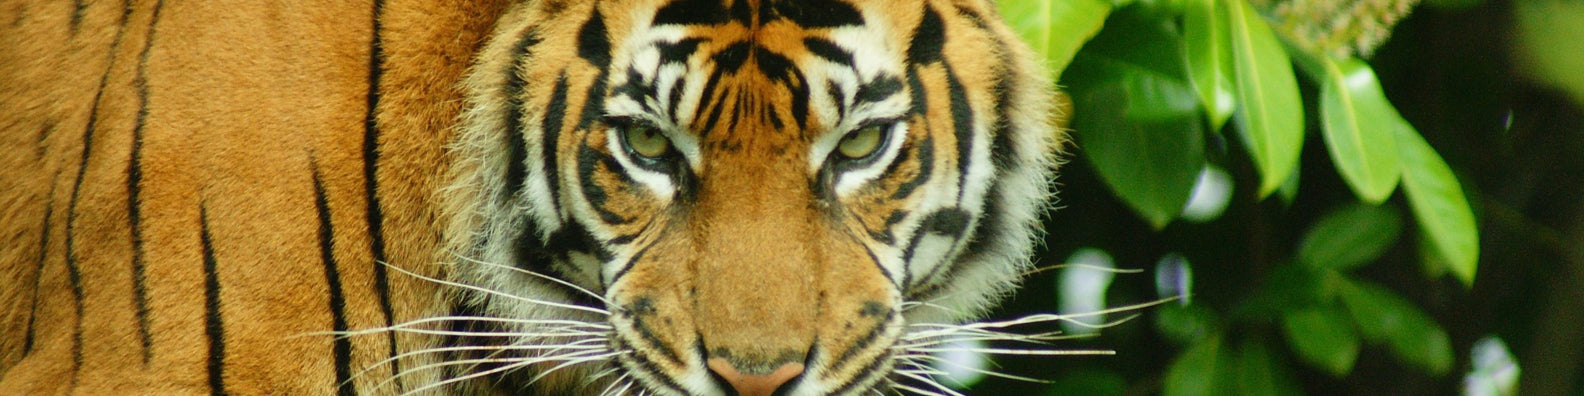 Sumatran tigers on path to recovery